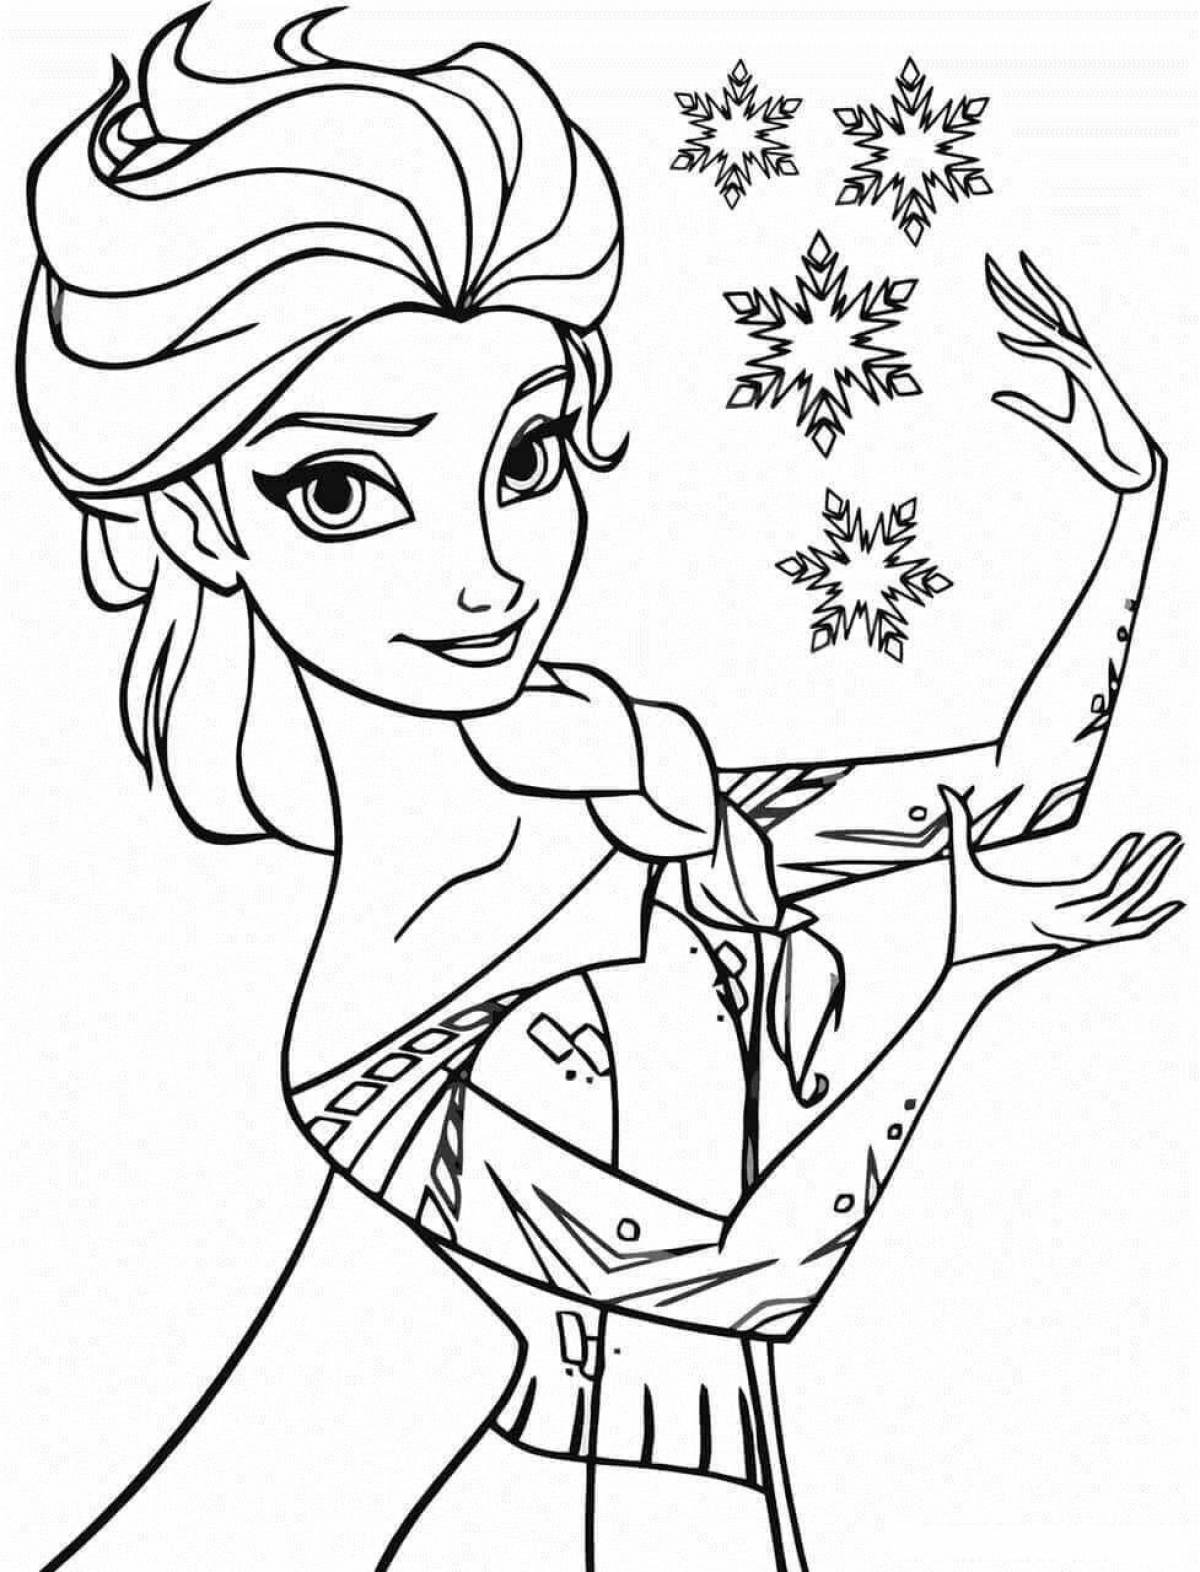 Elsa's amazing coloring book